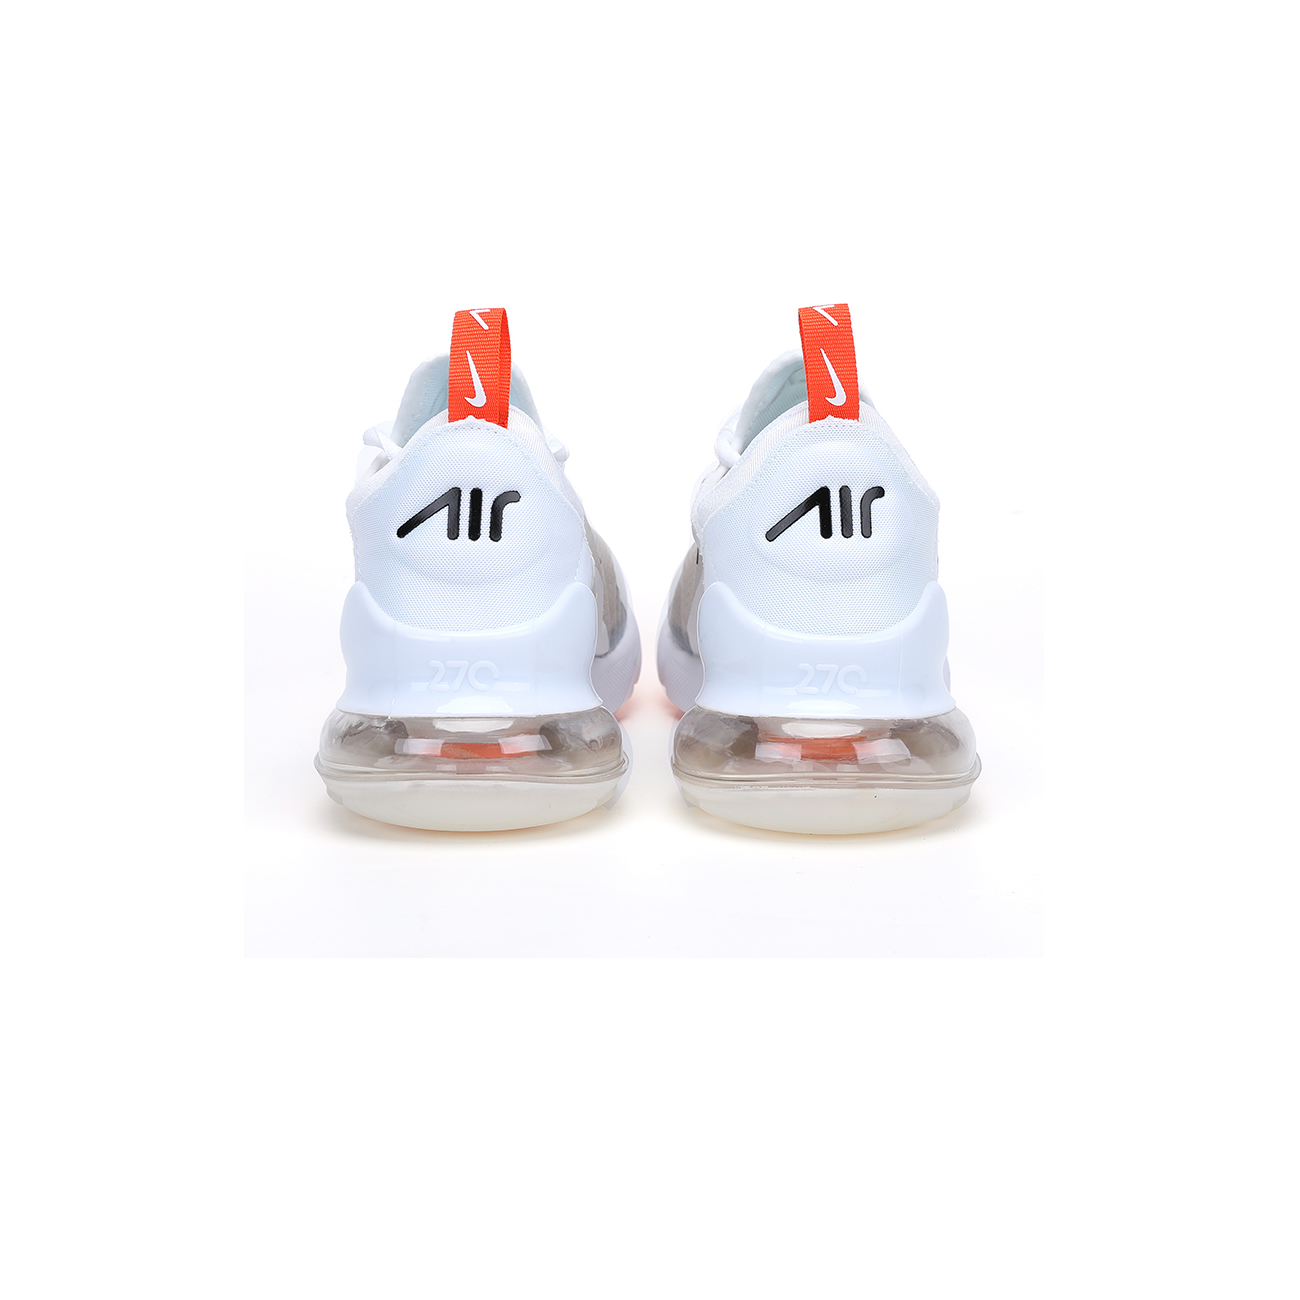 Nike air max 270 White orange